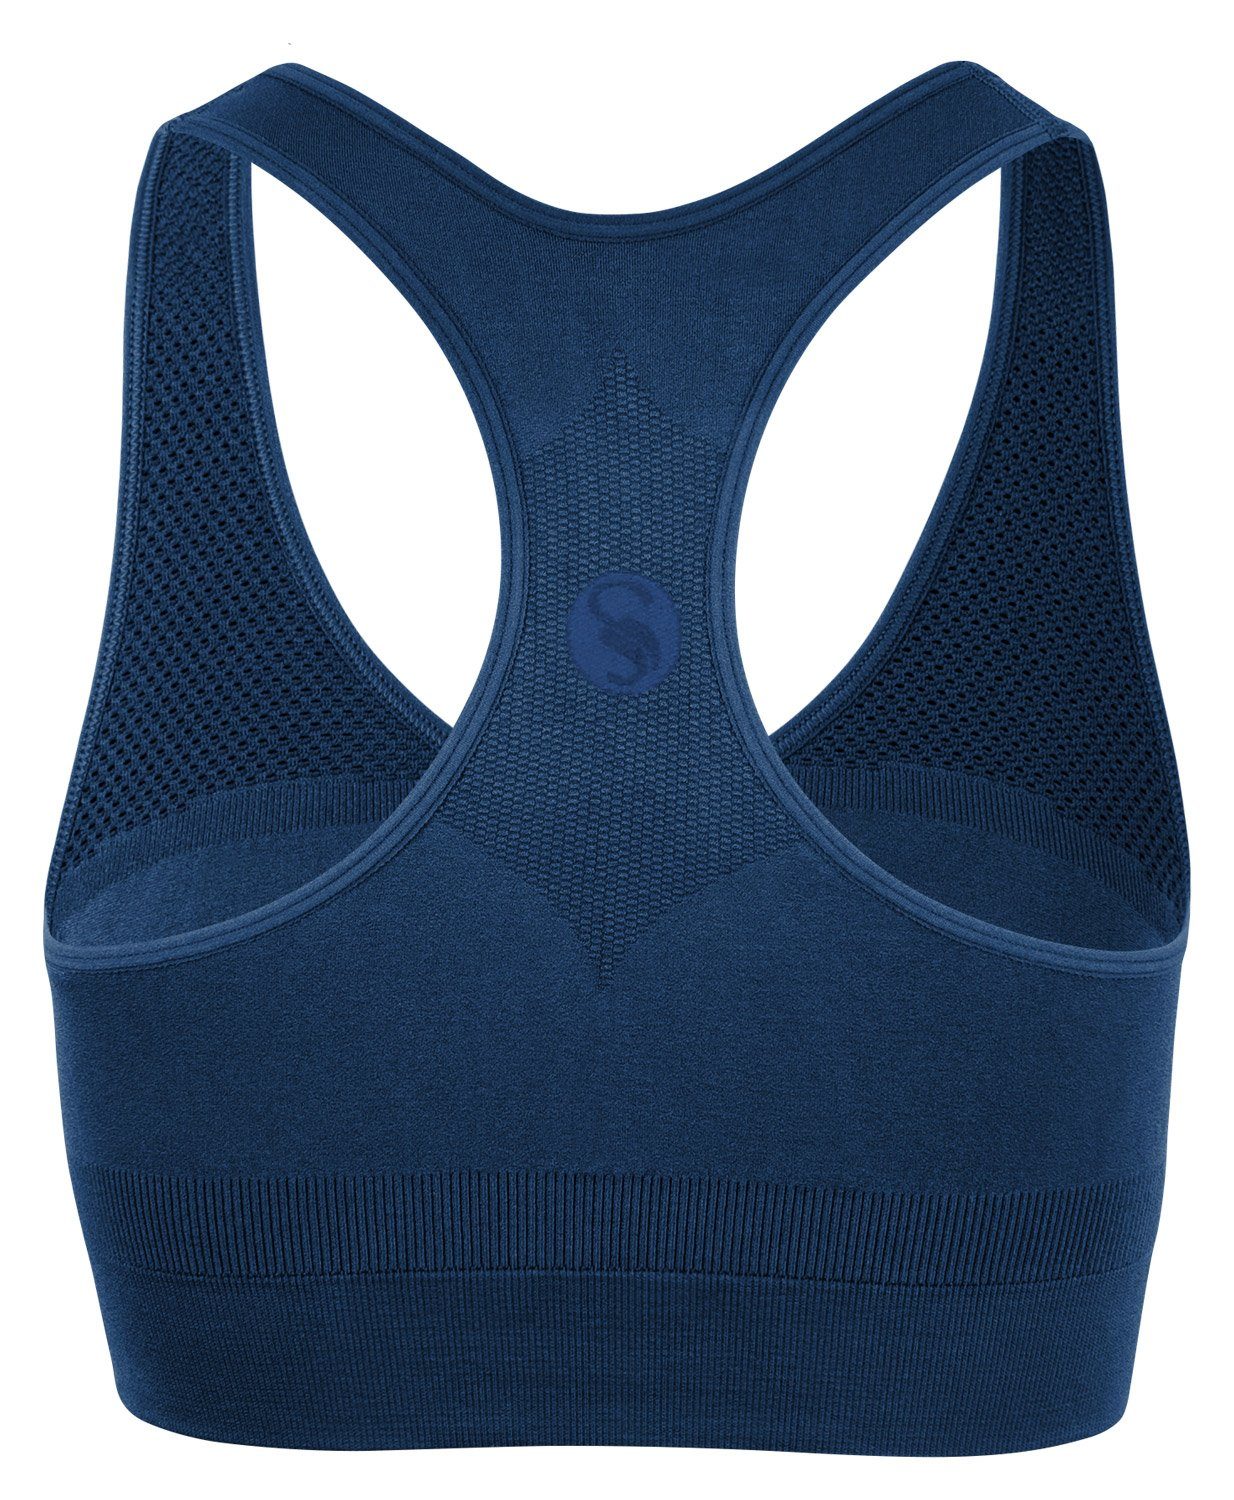 Sport Bra BH, Stark Material Light - Damen Support Marineblau für Doppellagiges doppellagig, Soul® Sport-BH